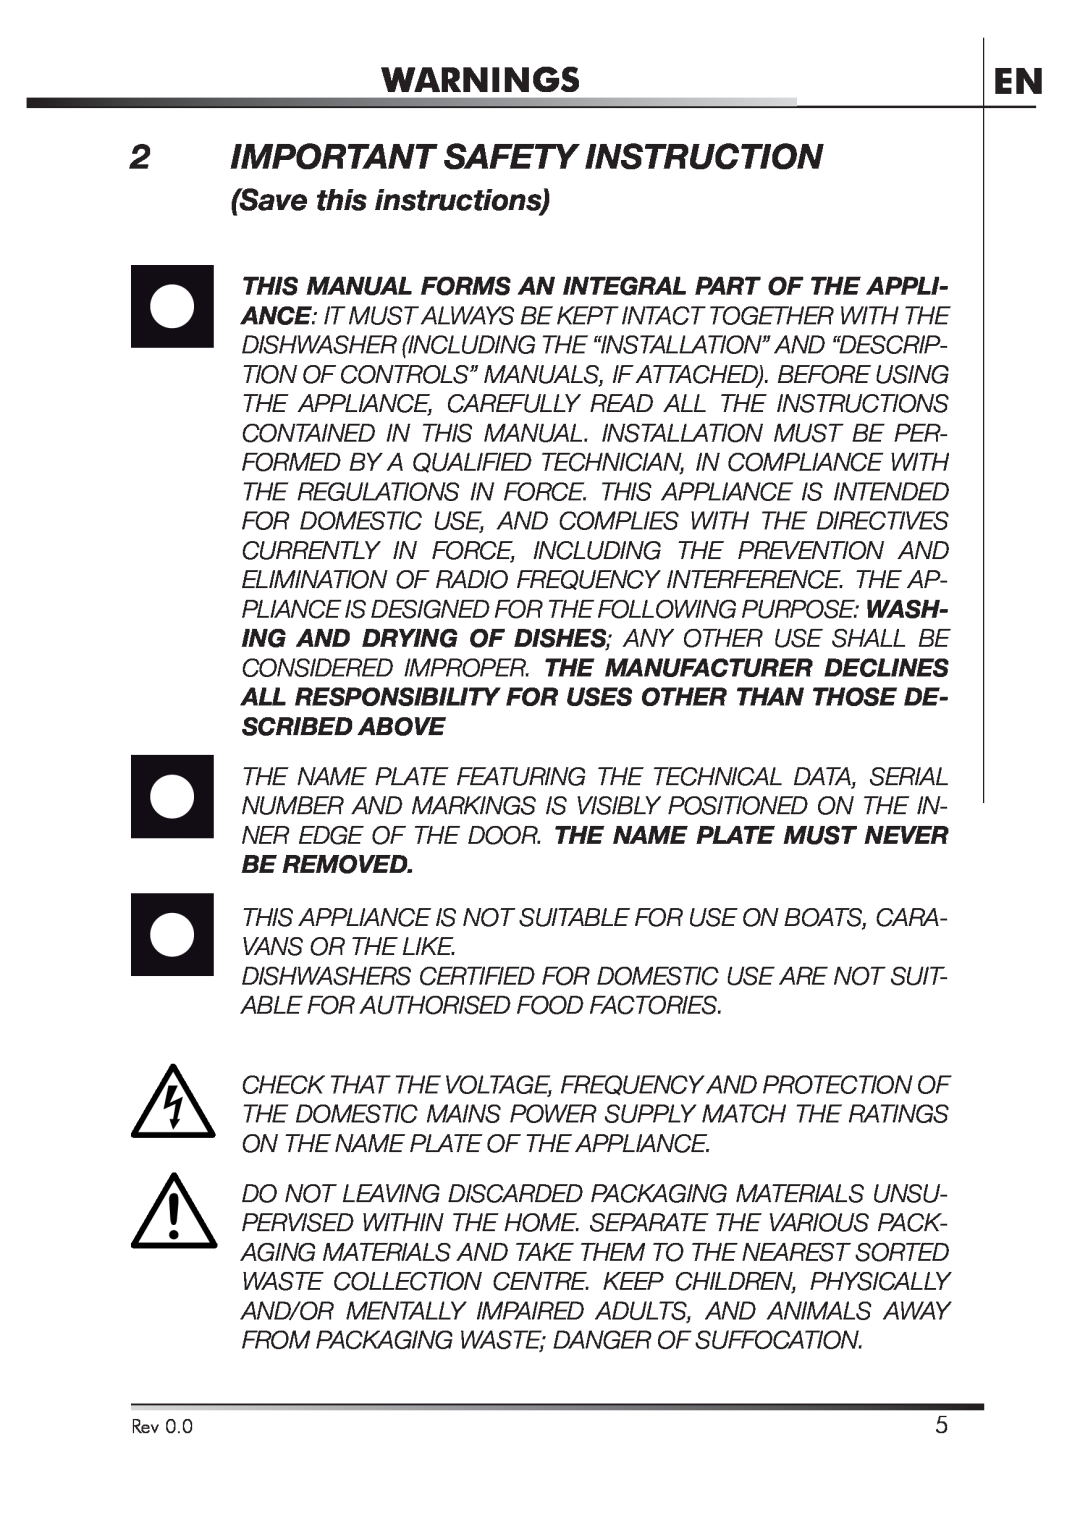 Smeg STA4645 instruction manual Warnings, Important Safety Instruction, Save this instructions 